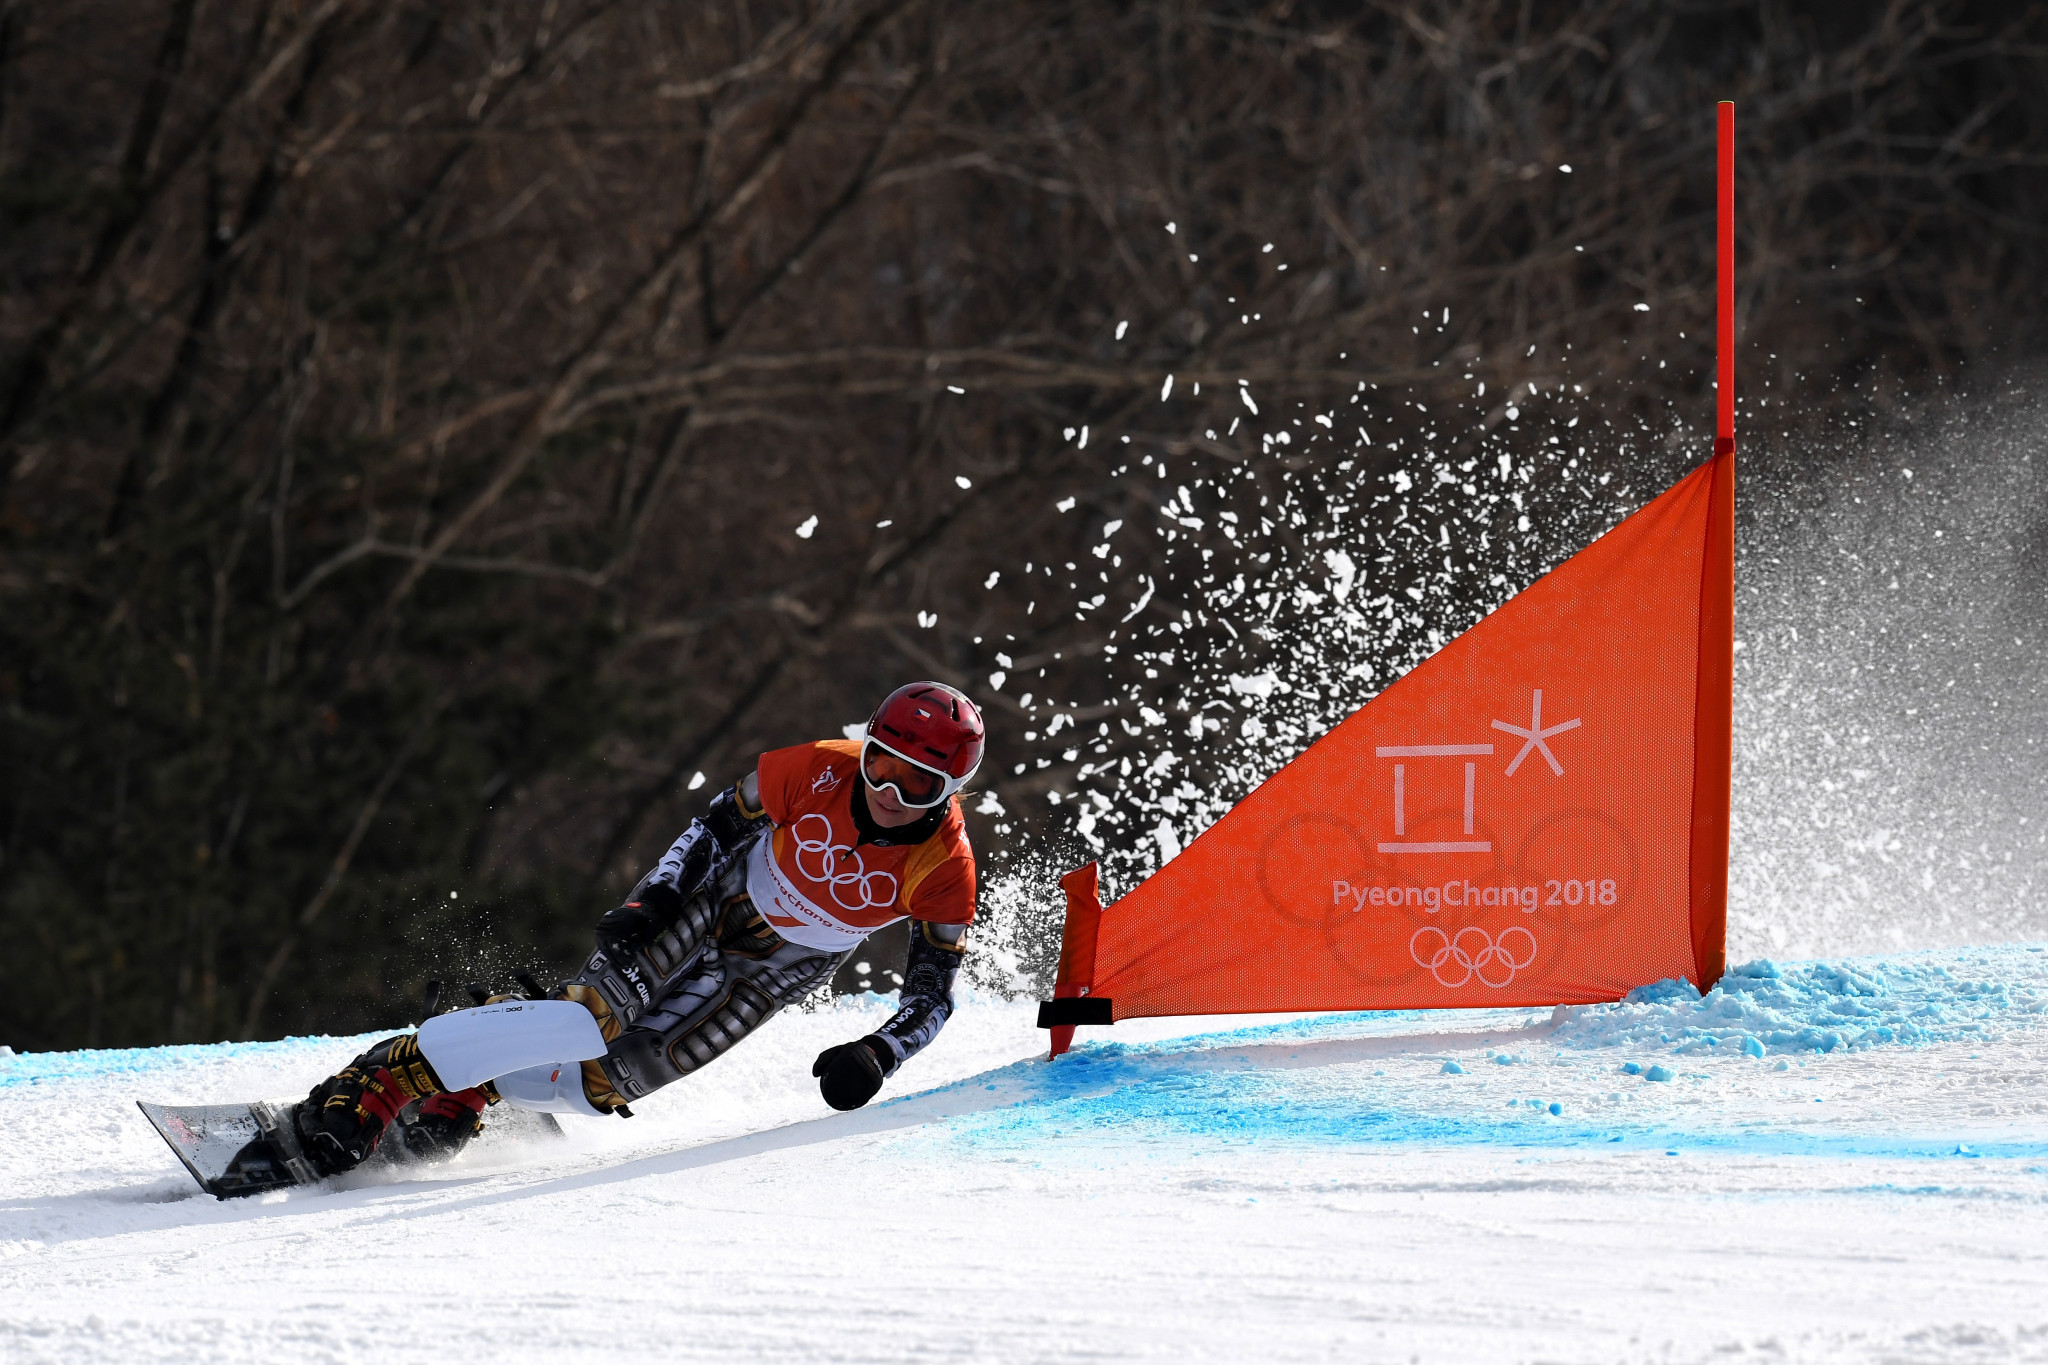 Ledecká completes sensational golden double at Pyeongchang 2018 with parallel giant slalom triumph